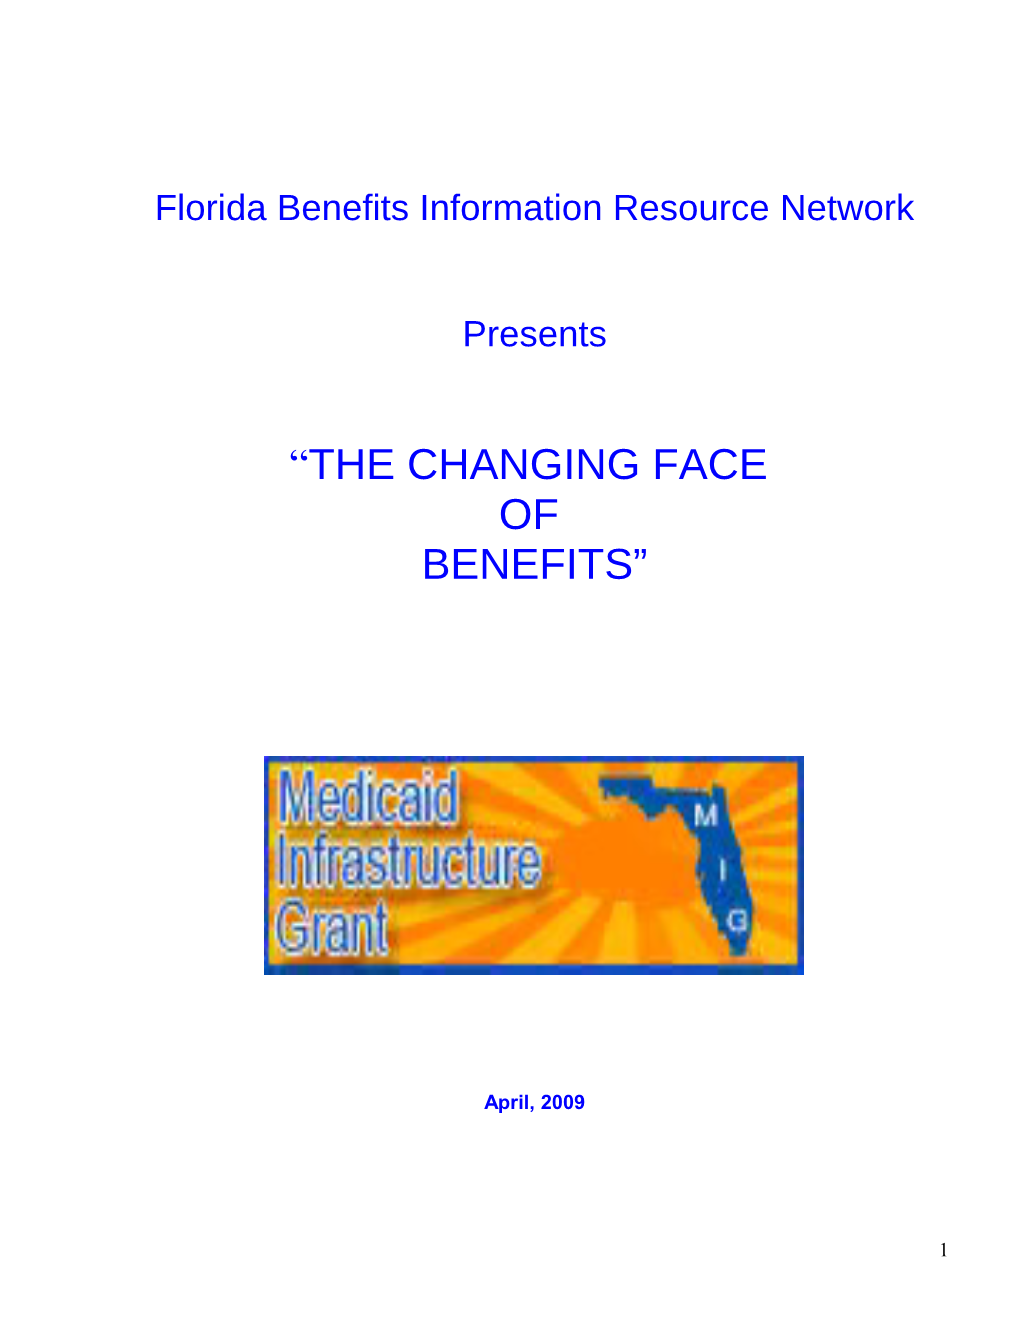 Florida Benefits Information Referral Network